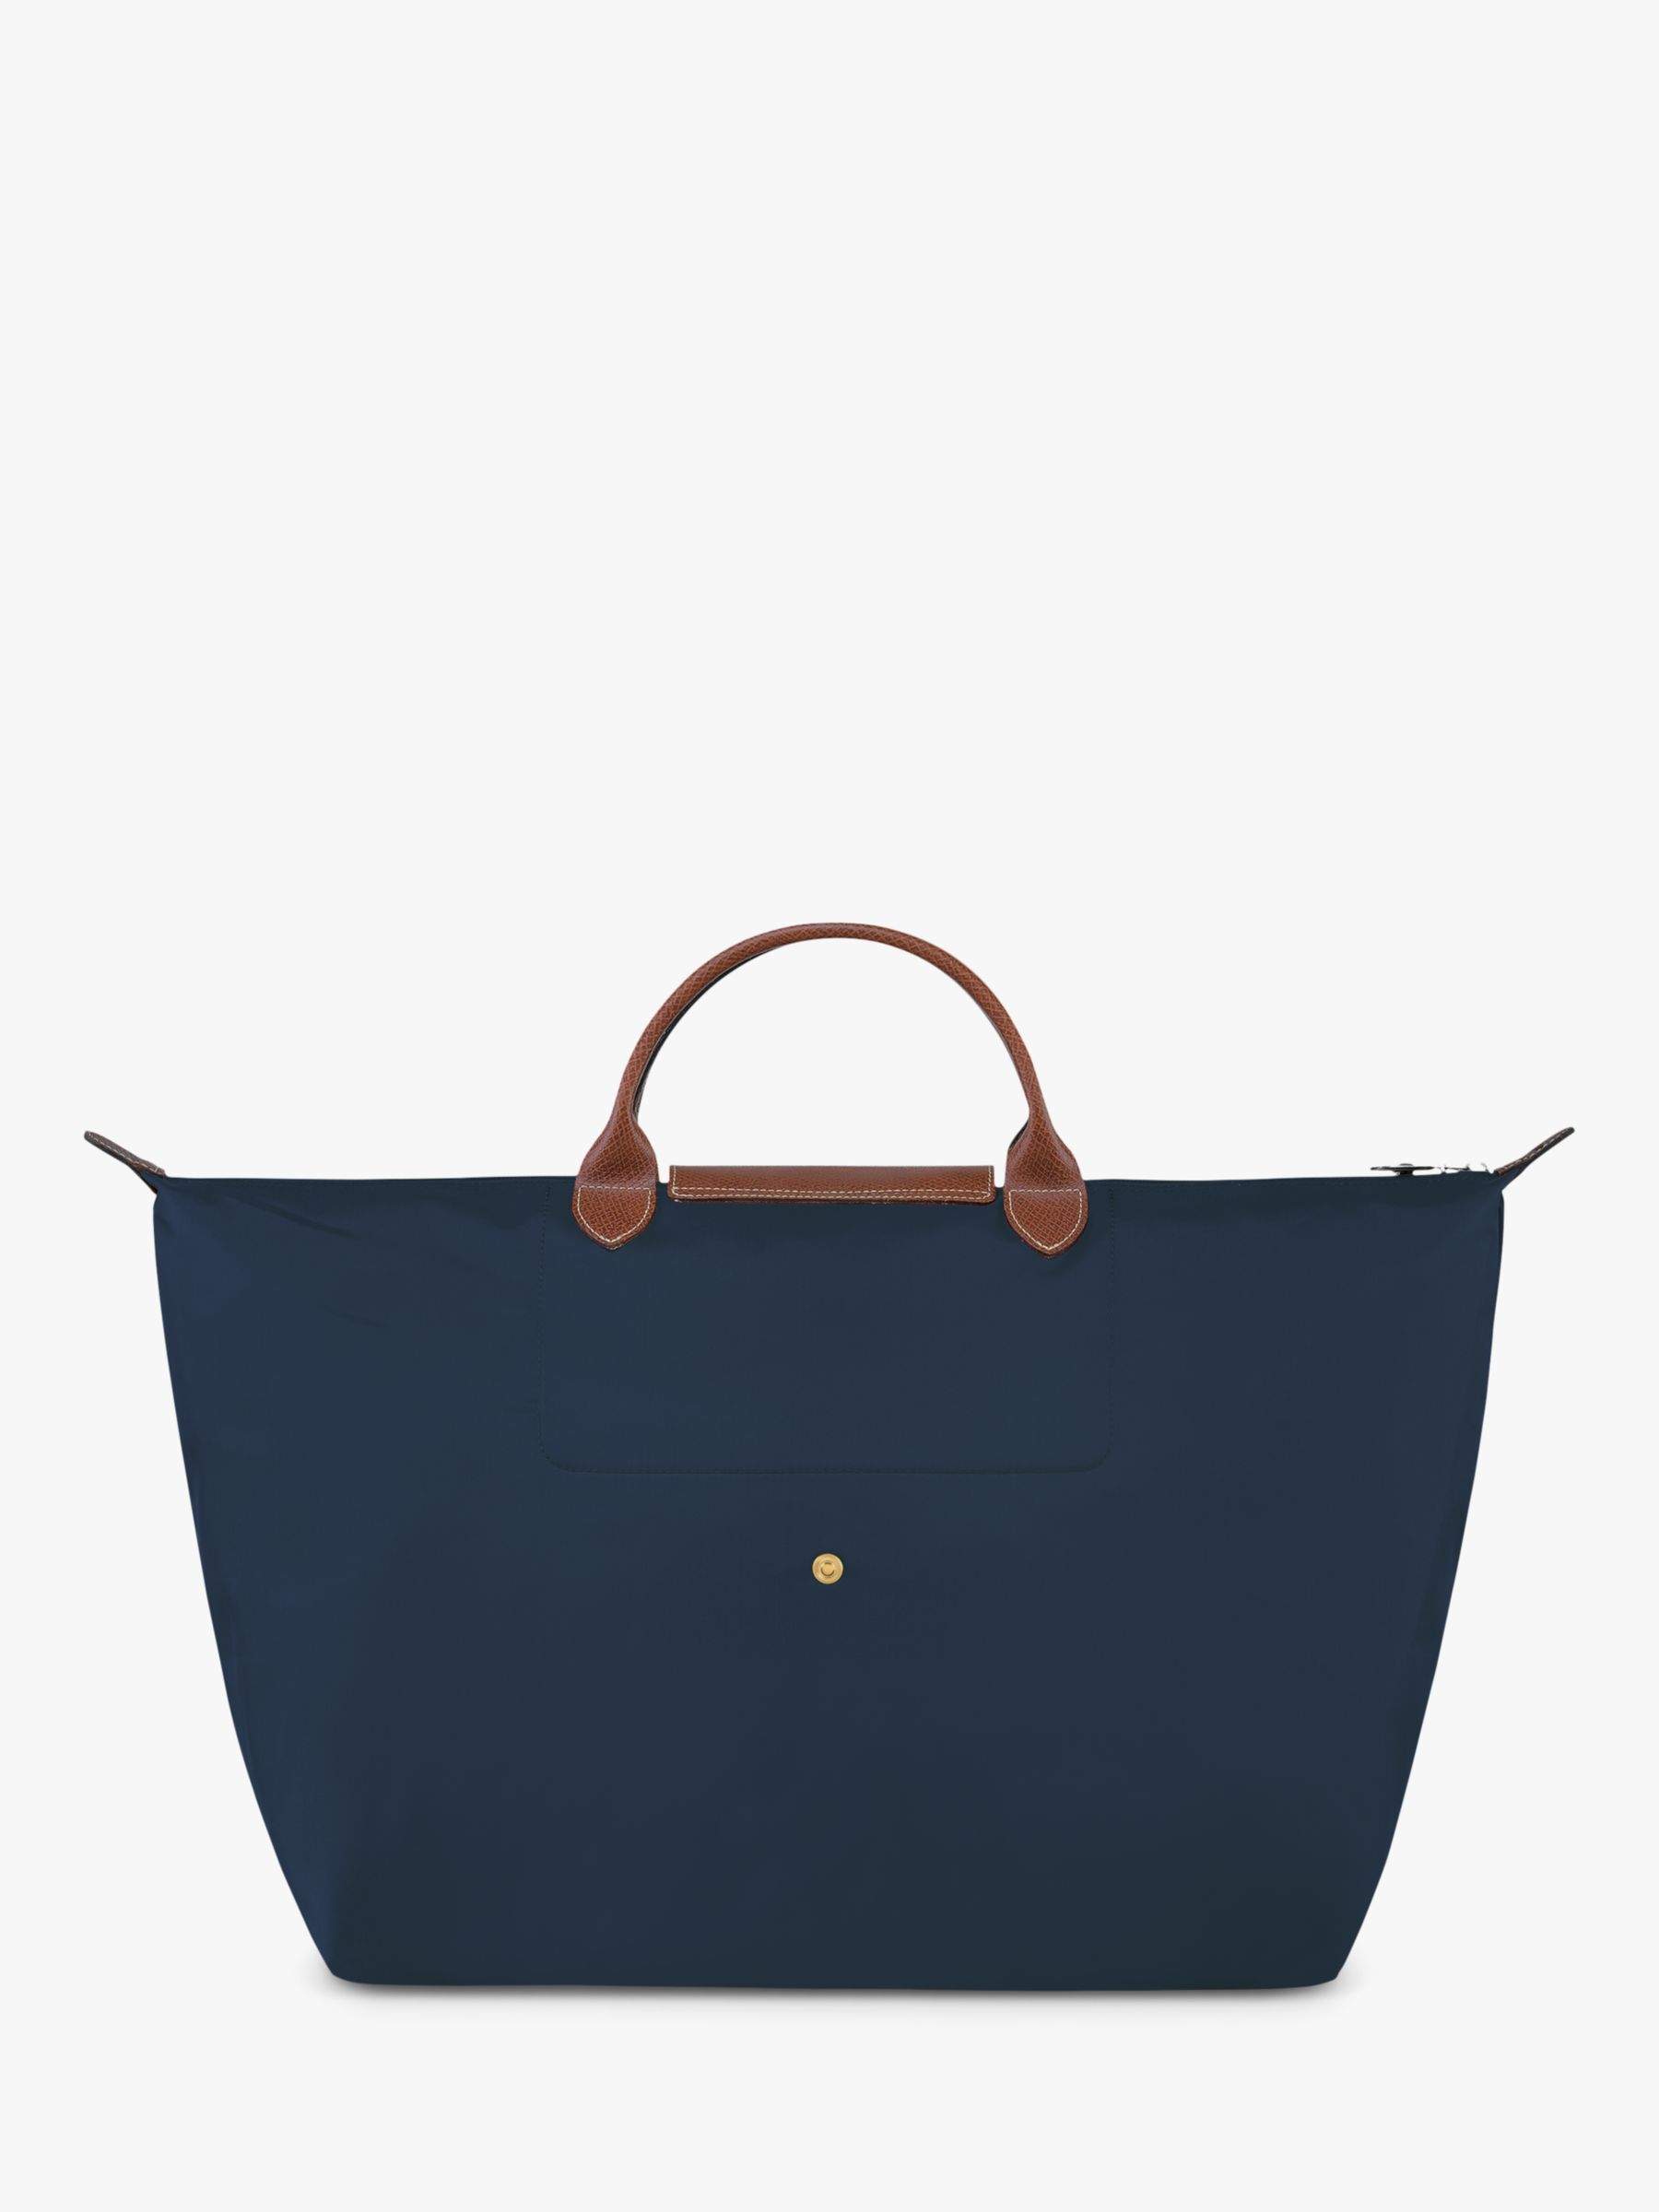 Longchamp Le Pliage Original Small Top Handle Bag, Rich Navy at